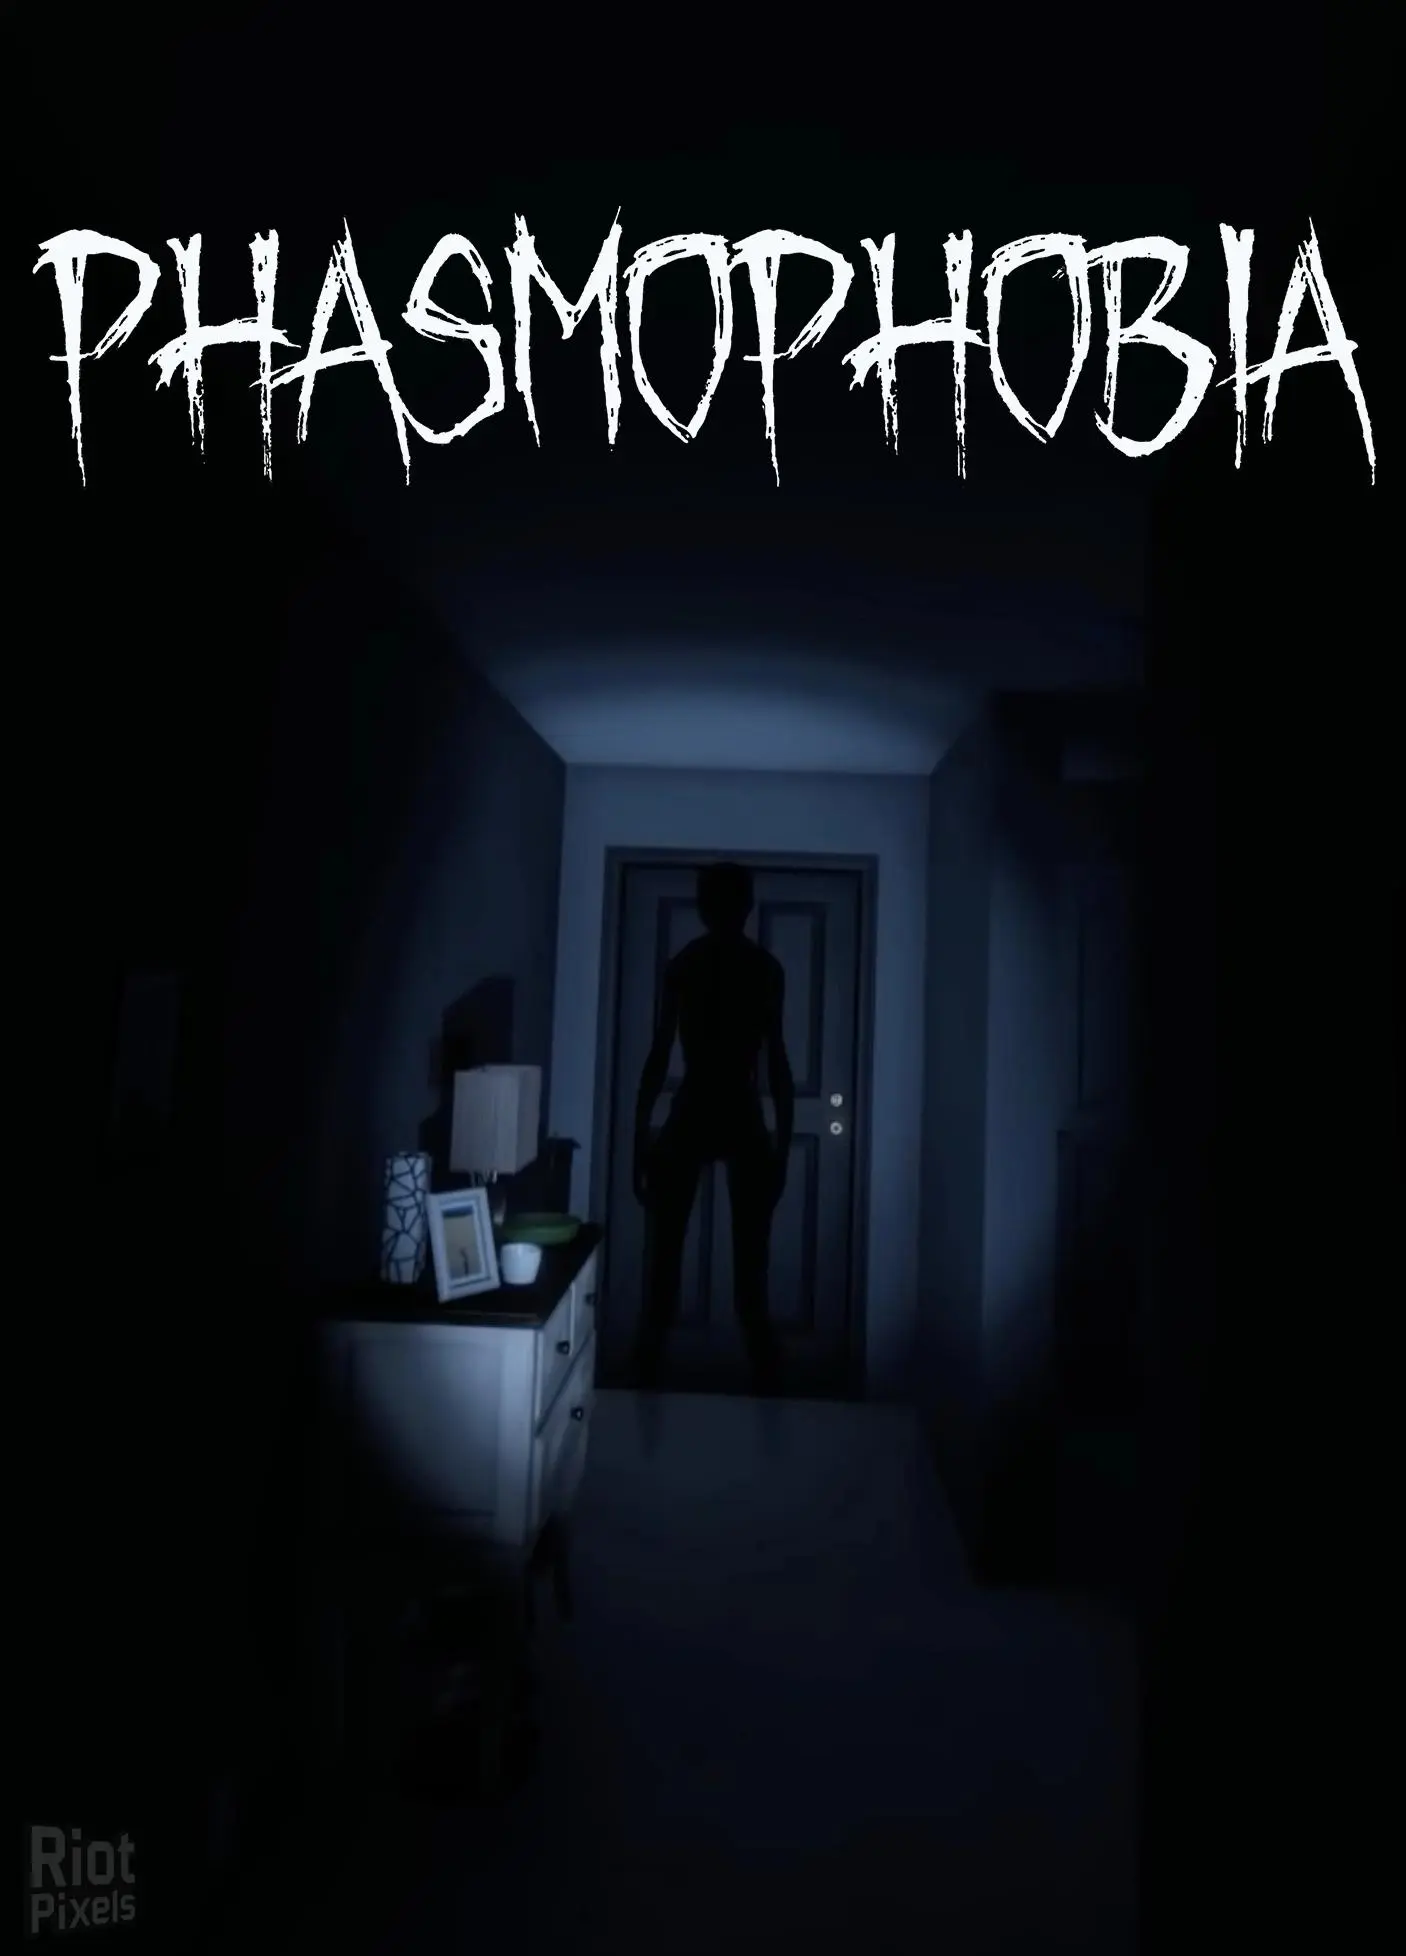 Phasmophobia (PC) - Steam - Digital Code